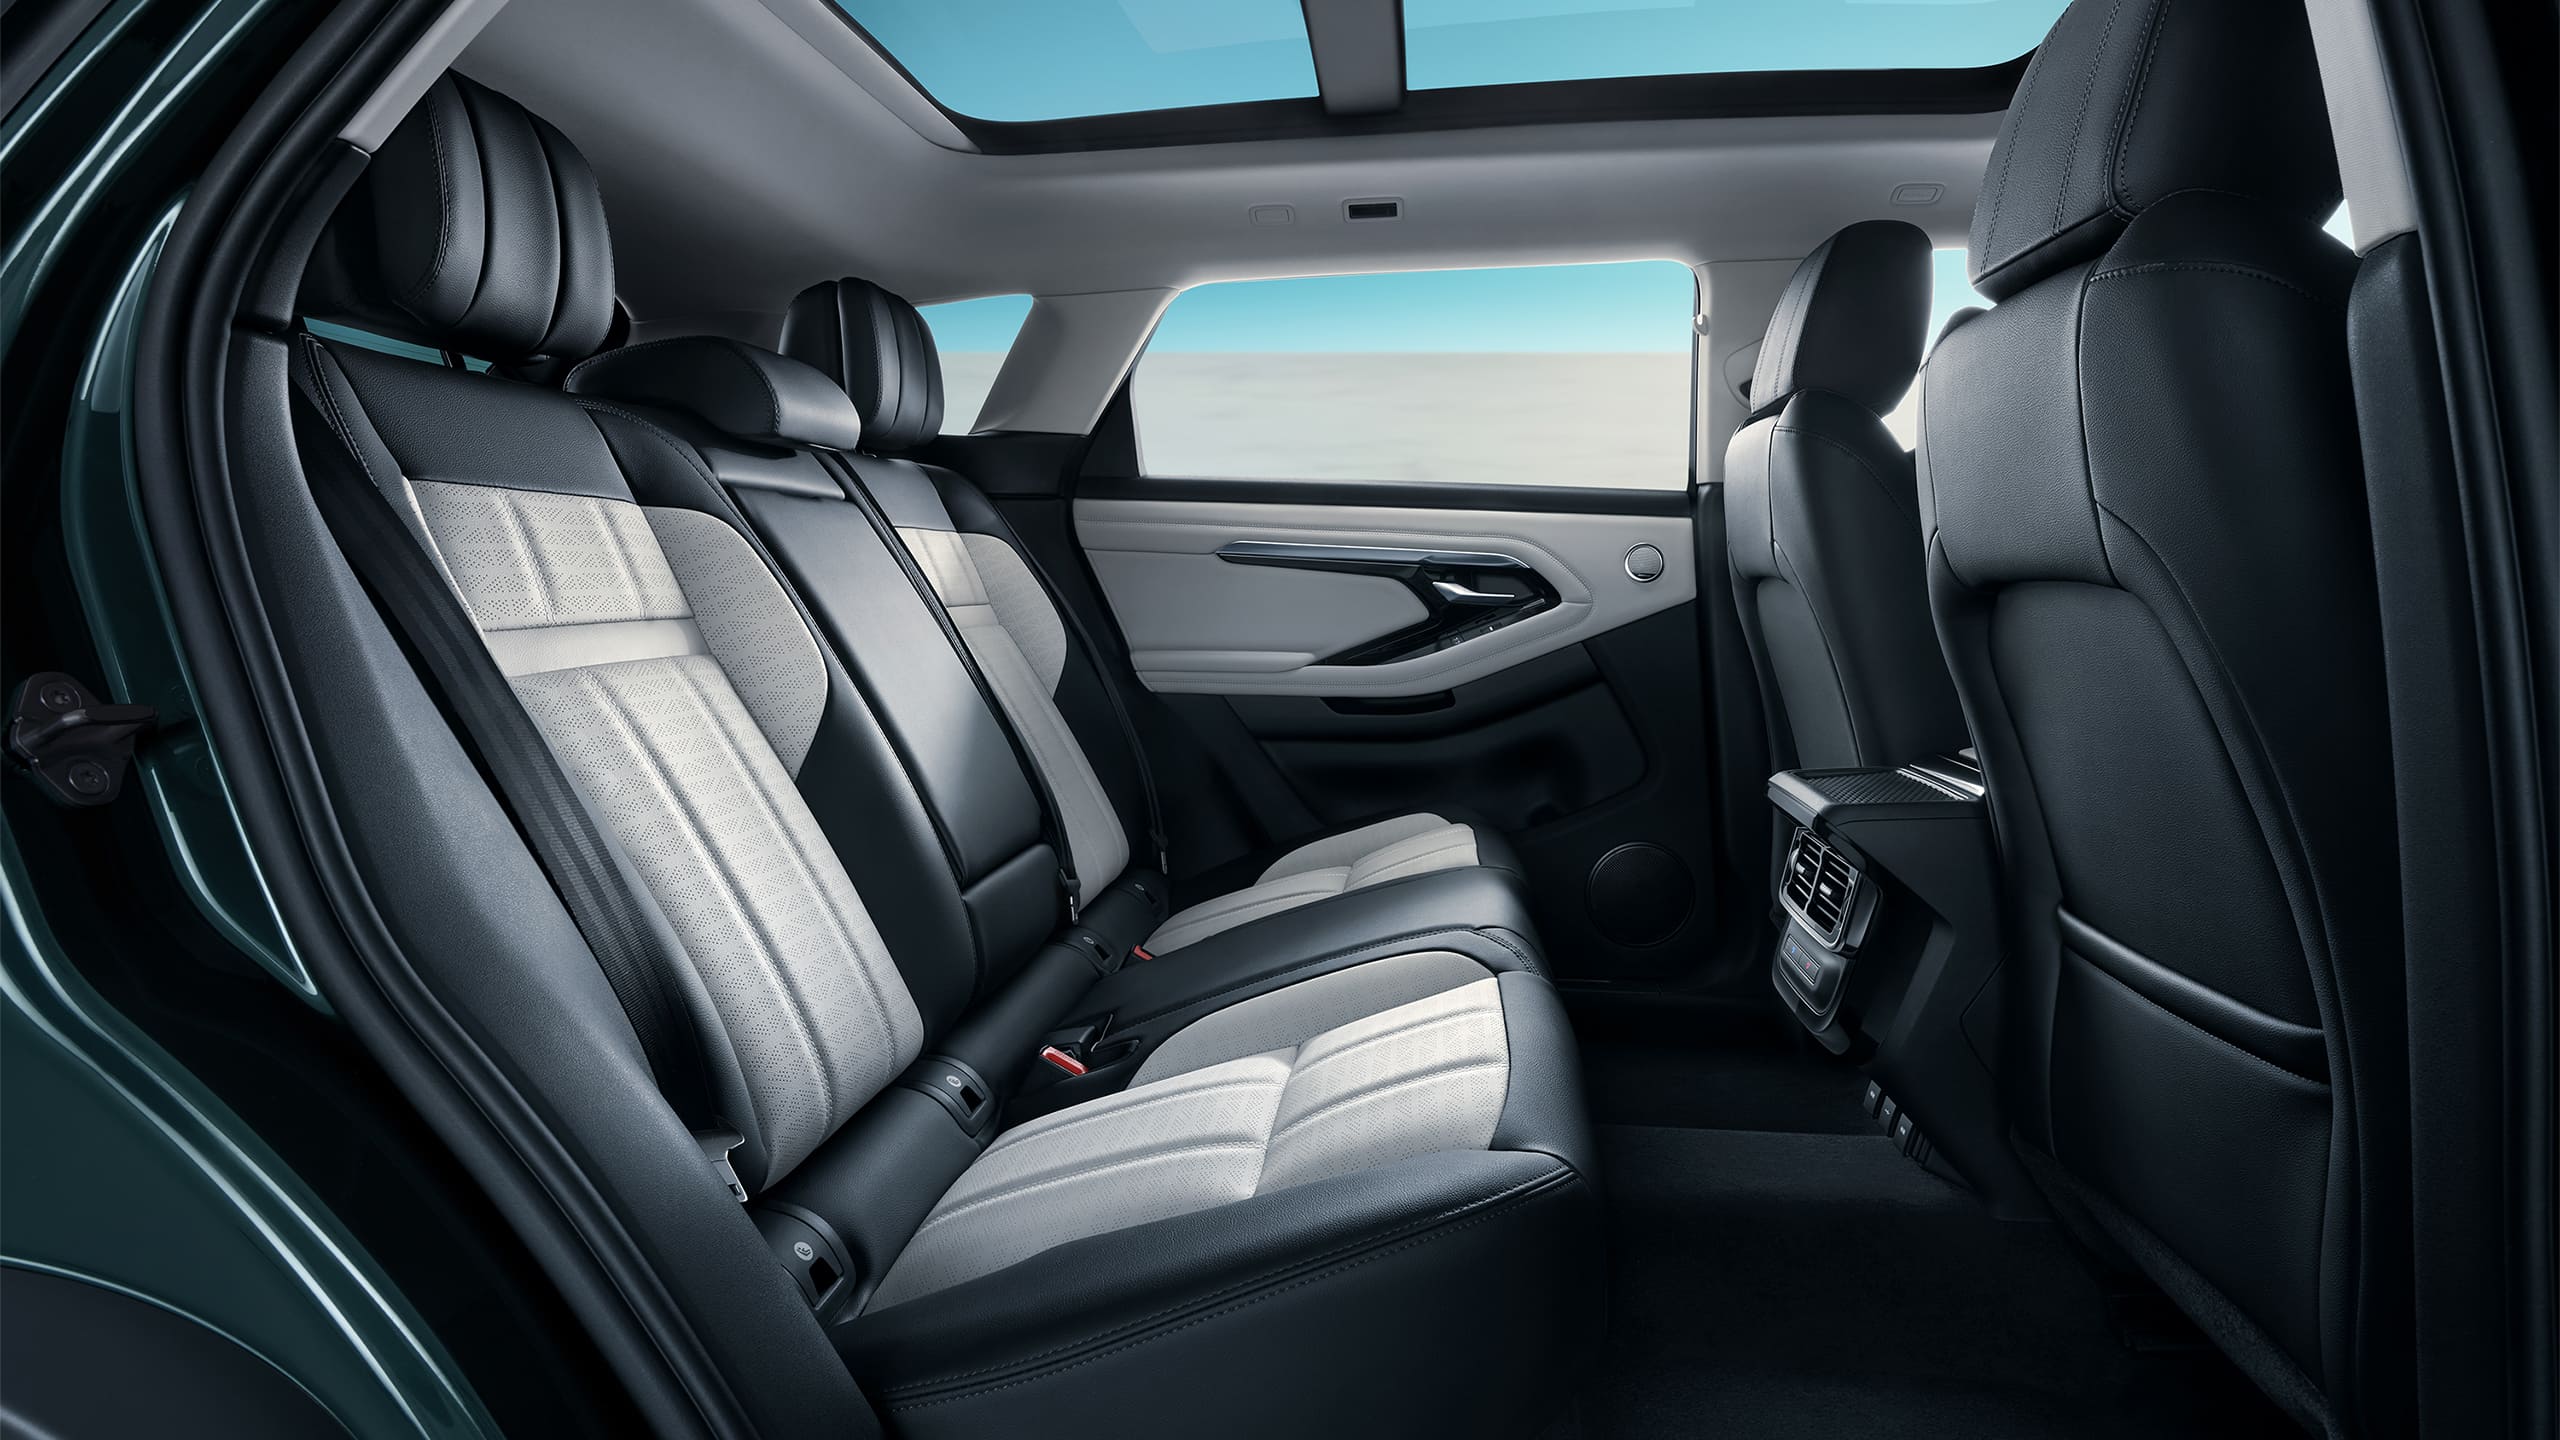 Range Rover Evoque Back seat